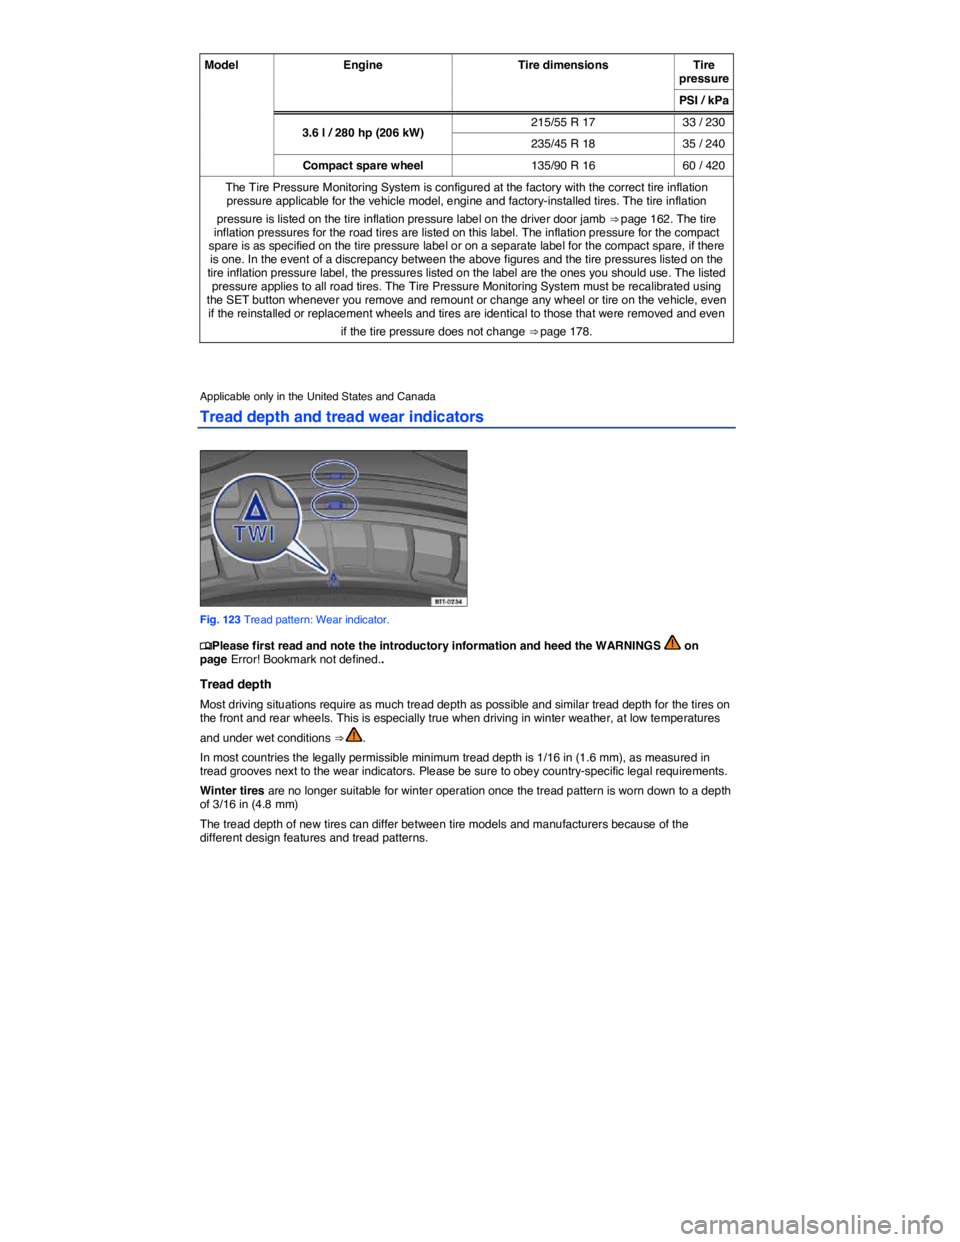 VOLKSWAGEN PASSAT 2014  Owner´s Manual  
Model  Engine  Tire dimensions Tire pressure 
PSI / kPa 
3.6 l / 280 hp (206 kW) 215/55 R 17  33 / 230 
235/45 R 18  35 / 240 
Compact spare wheel 135/90 R 16  60 / 420 
The Tire Pressure Monitoring